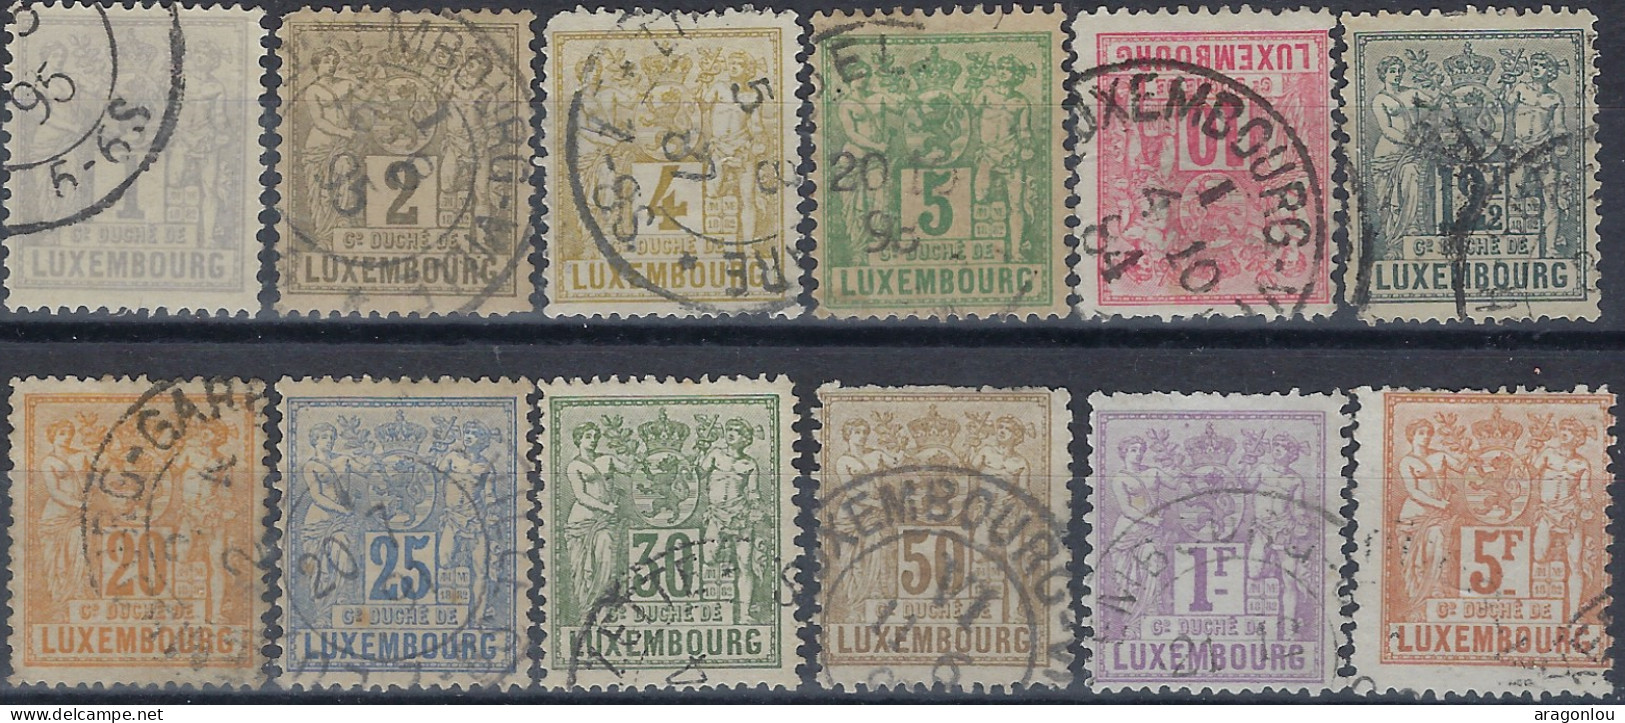 Luxembourg - Luxemburg - Timbres  1882   Allégorie   °   Satz   VC.  300,- - 1882 Alegorias